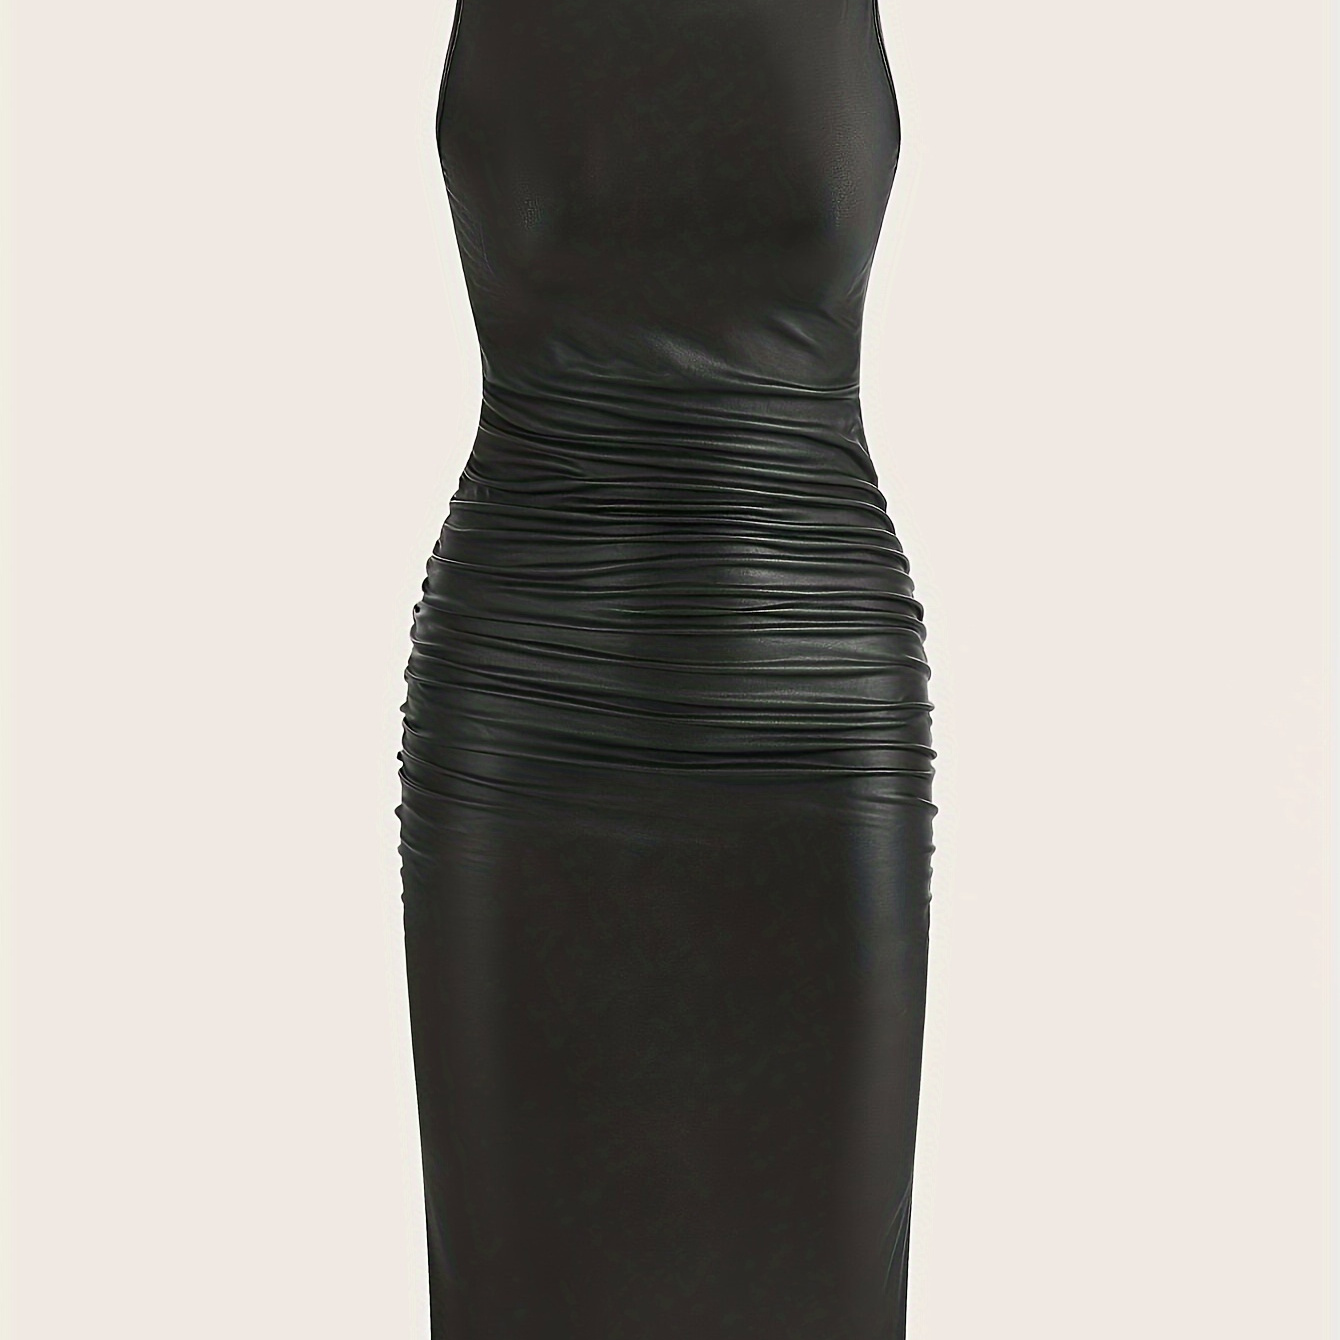 

Pu Leather Sleeveless Bodycon Dress, Elegant Crew Neck Dress For Summer & Spring, Women's Clothing